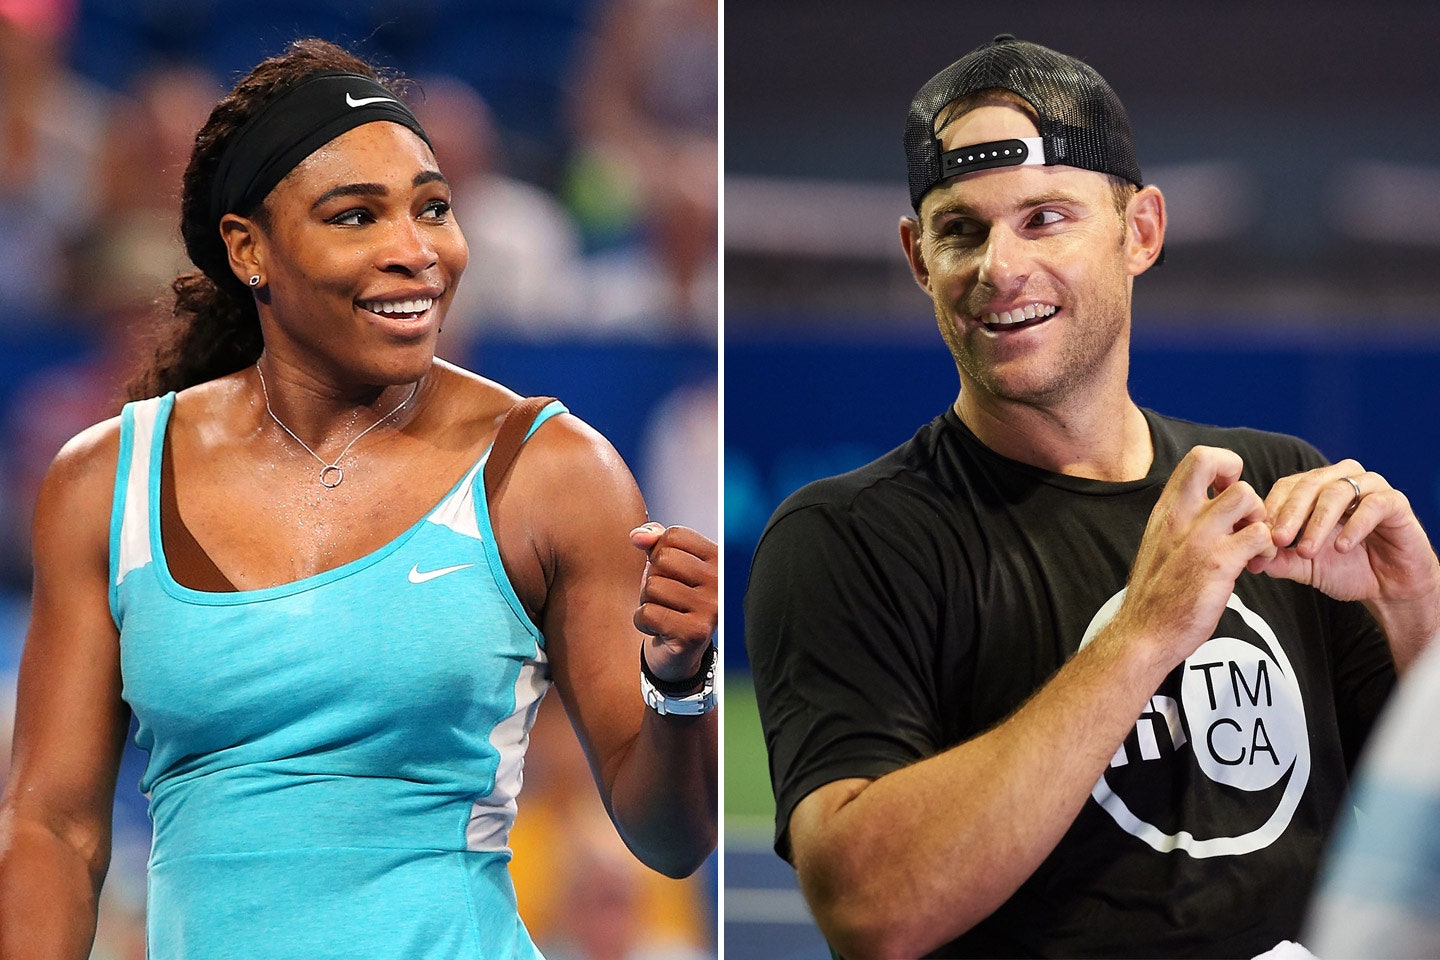 Serena Williams and Andy Roddick